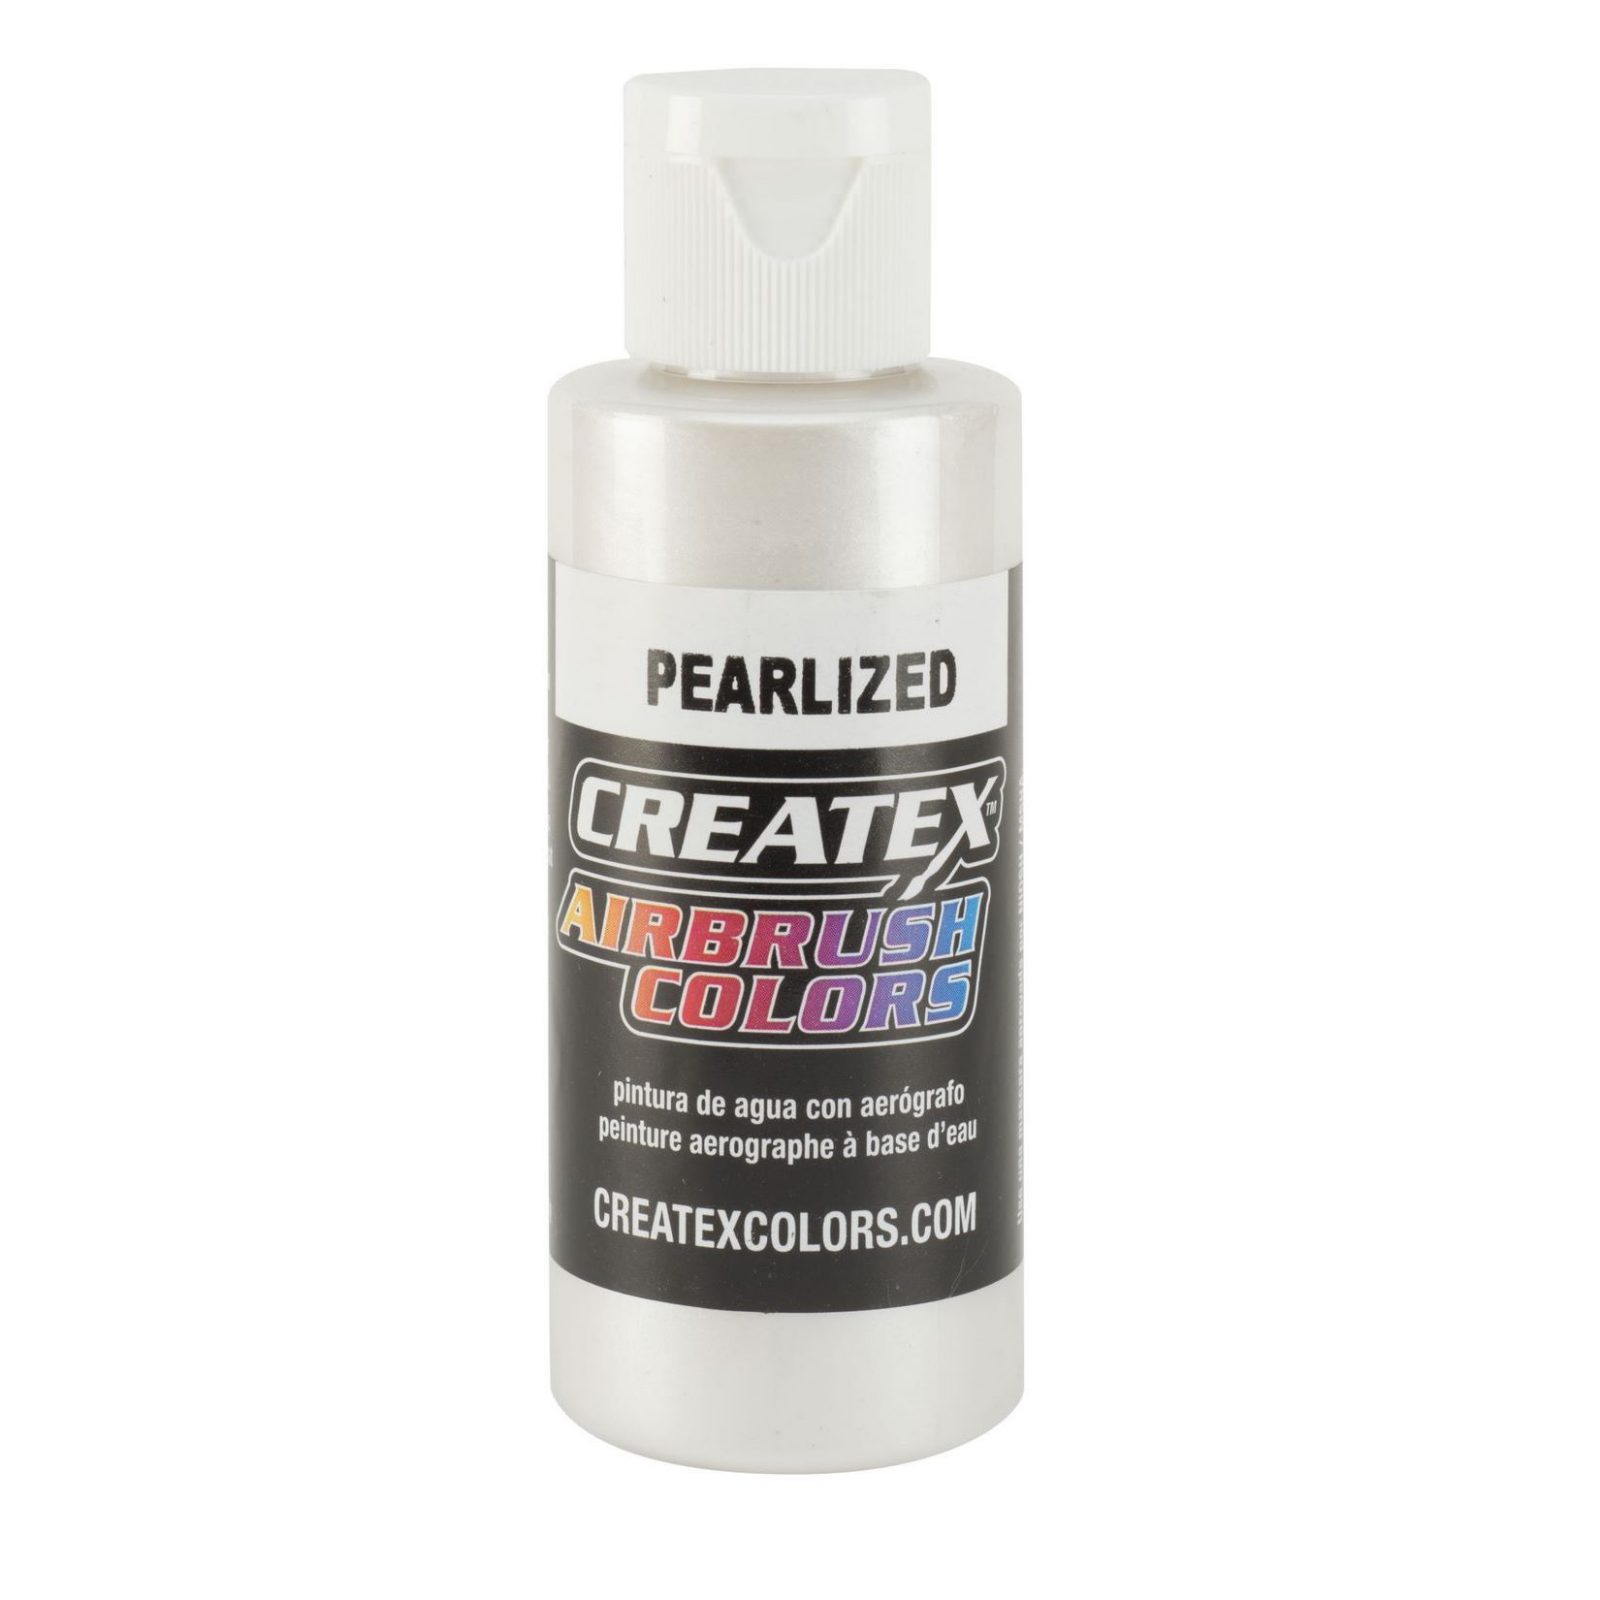 Createx Airbrush Colors Pearl White 4 oz.